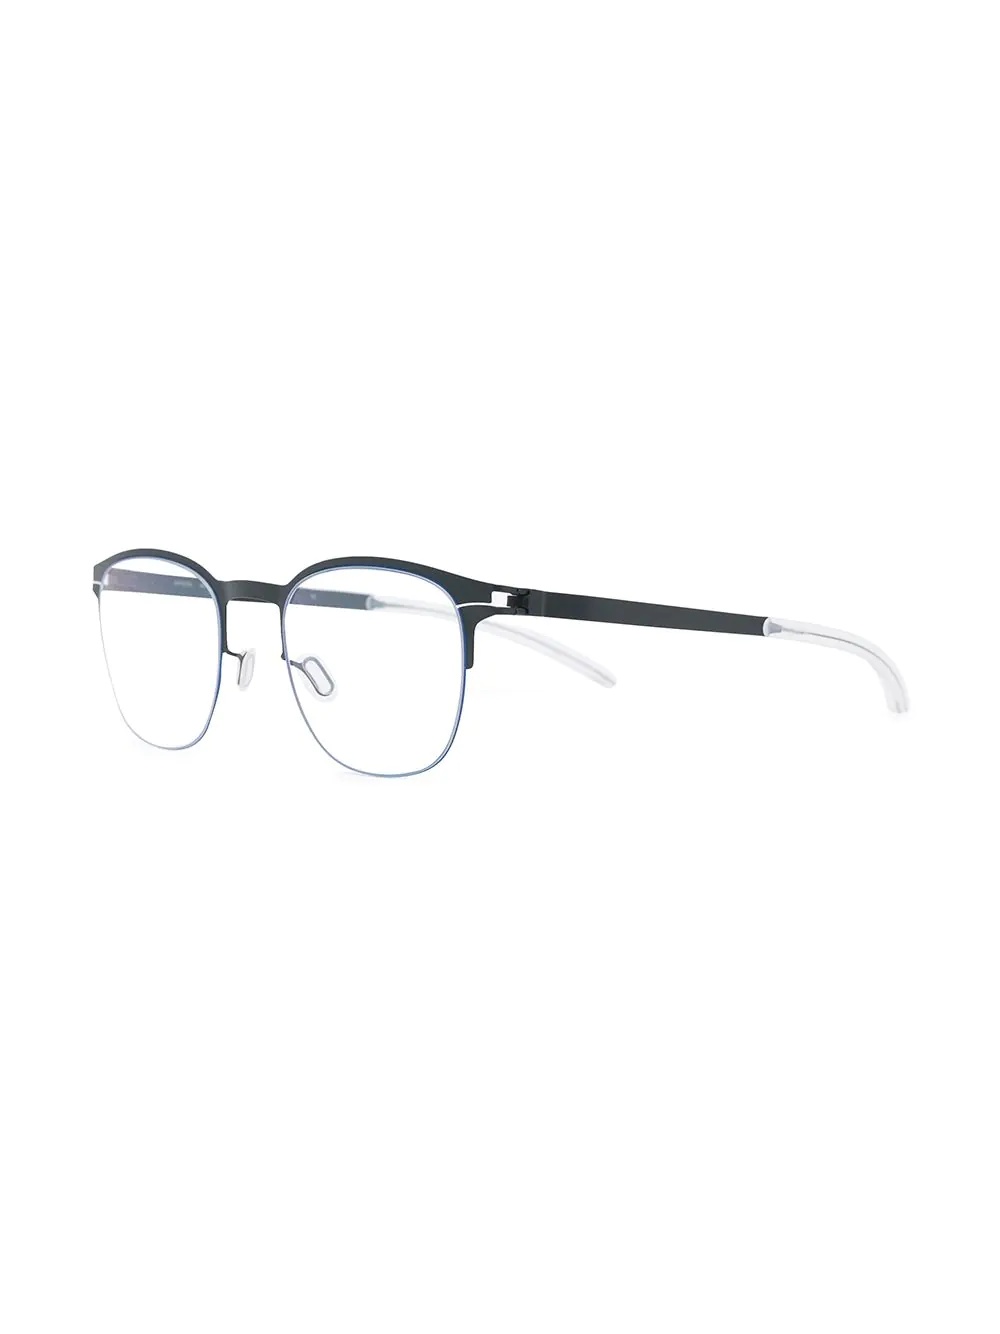 Neville pantos-frame glasses - 2